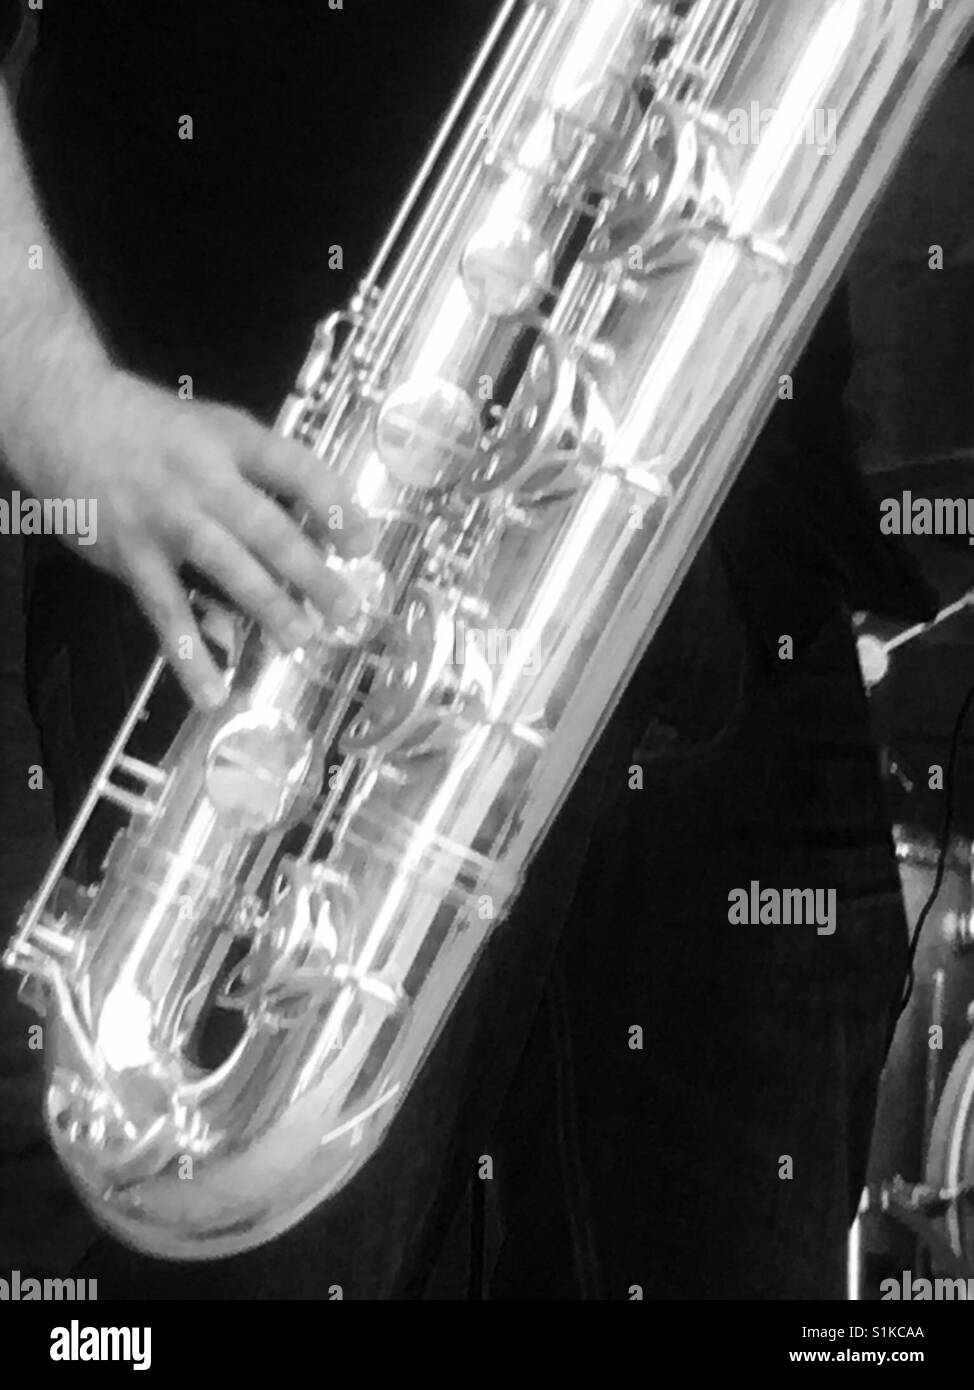 Baritone saxophone closeup black & white Stock Photo